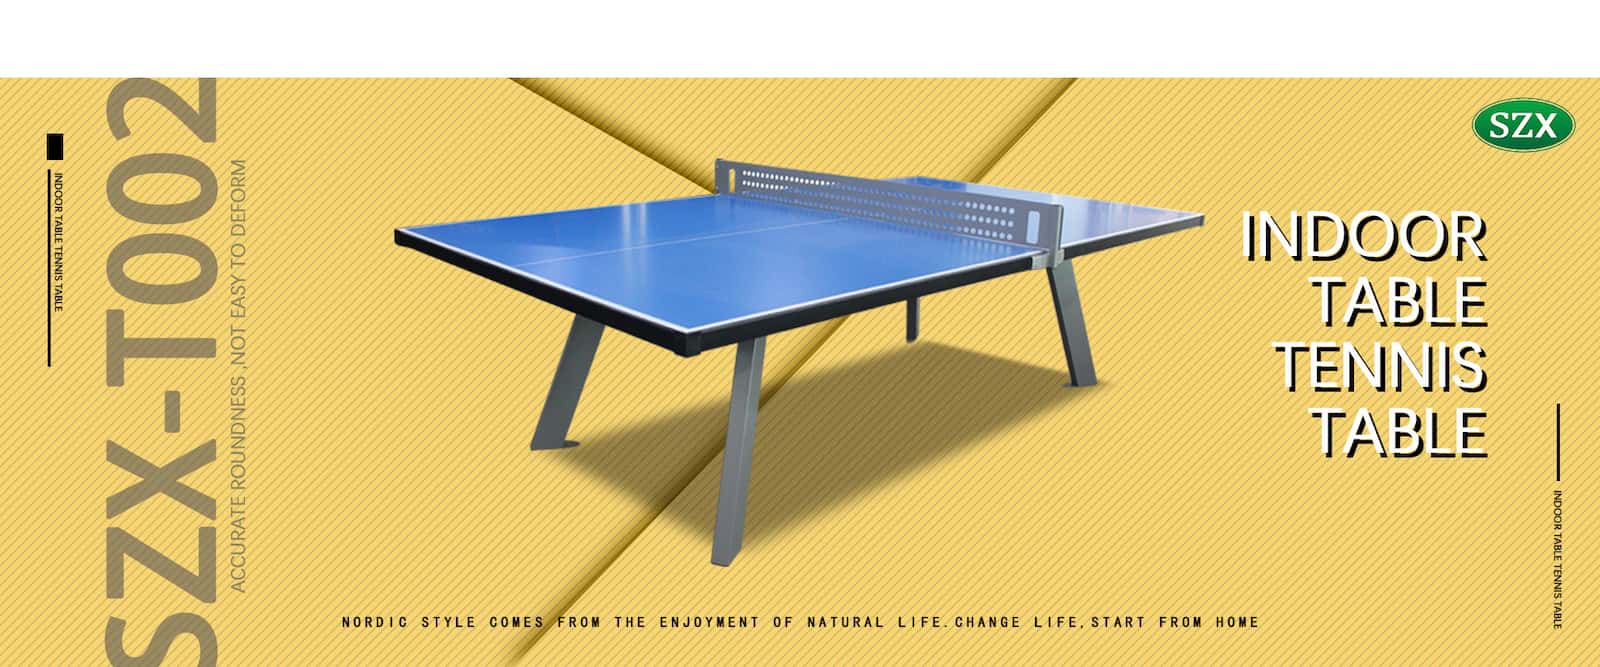 Indoor Table tennis table